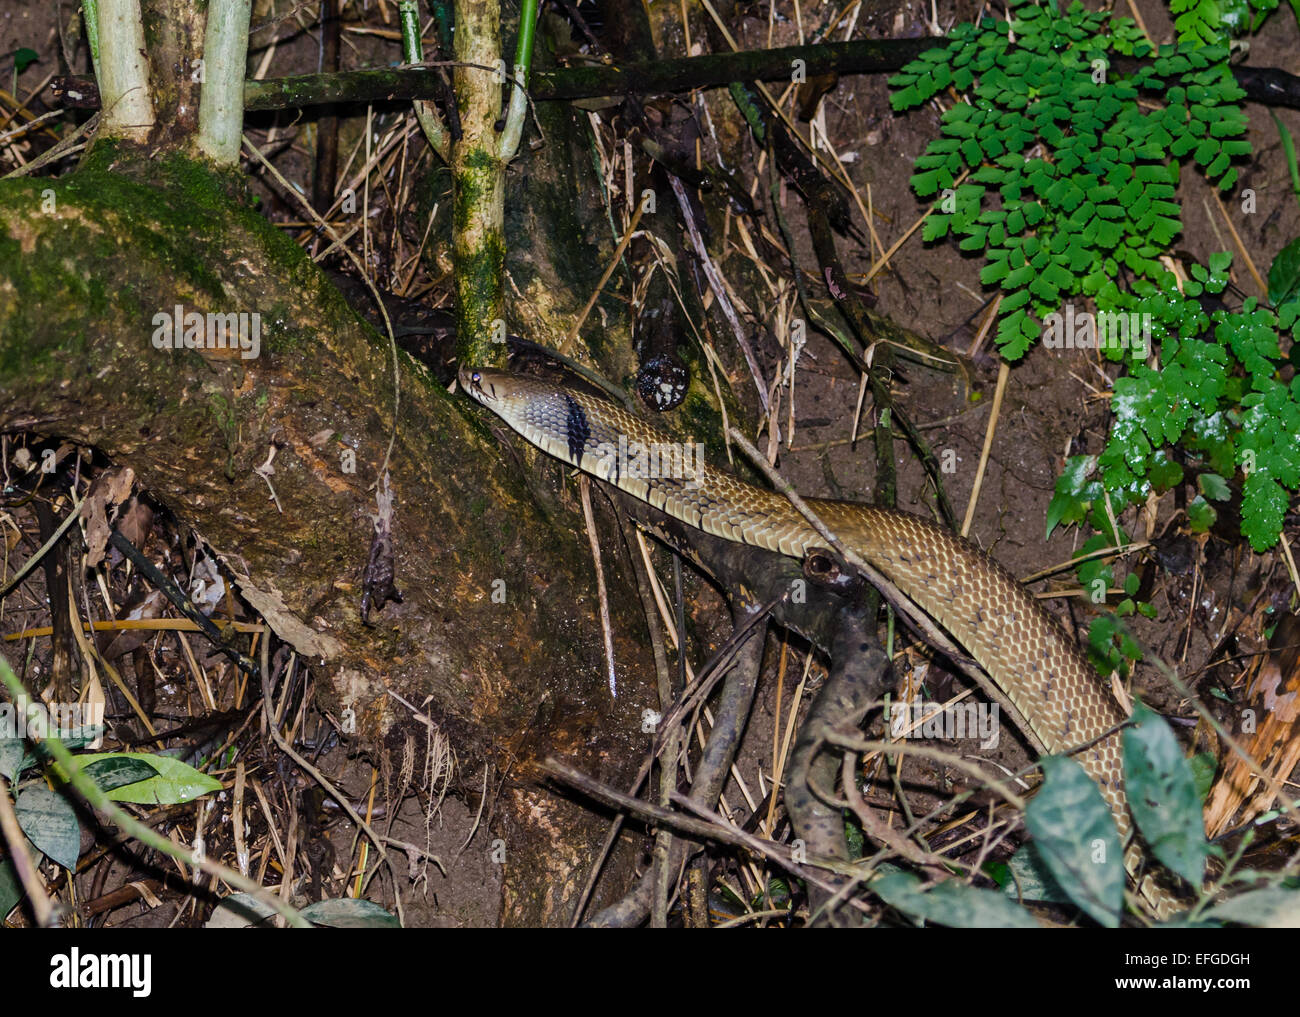 A Black-tailed Indigo Snake (Drymarchon melanurus) on forest floor. Belize, Central America. Stock Photo